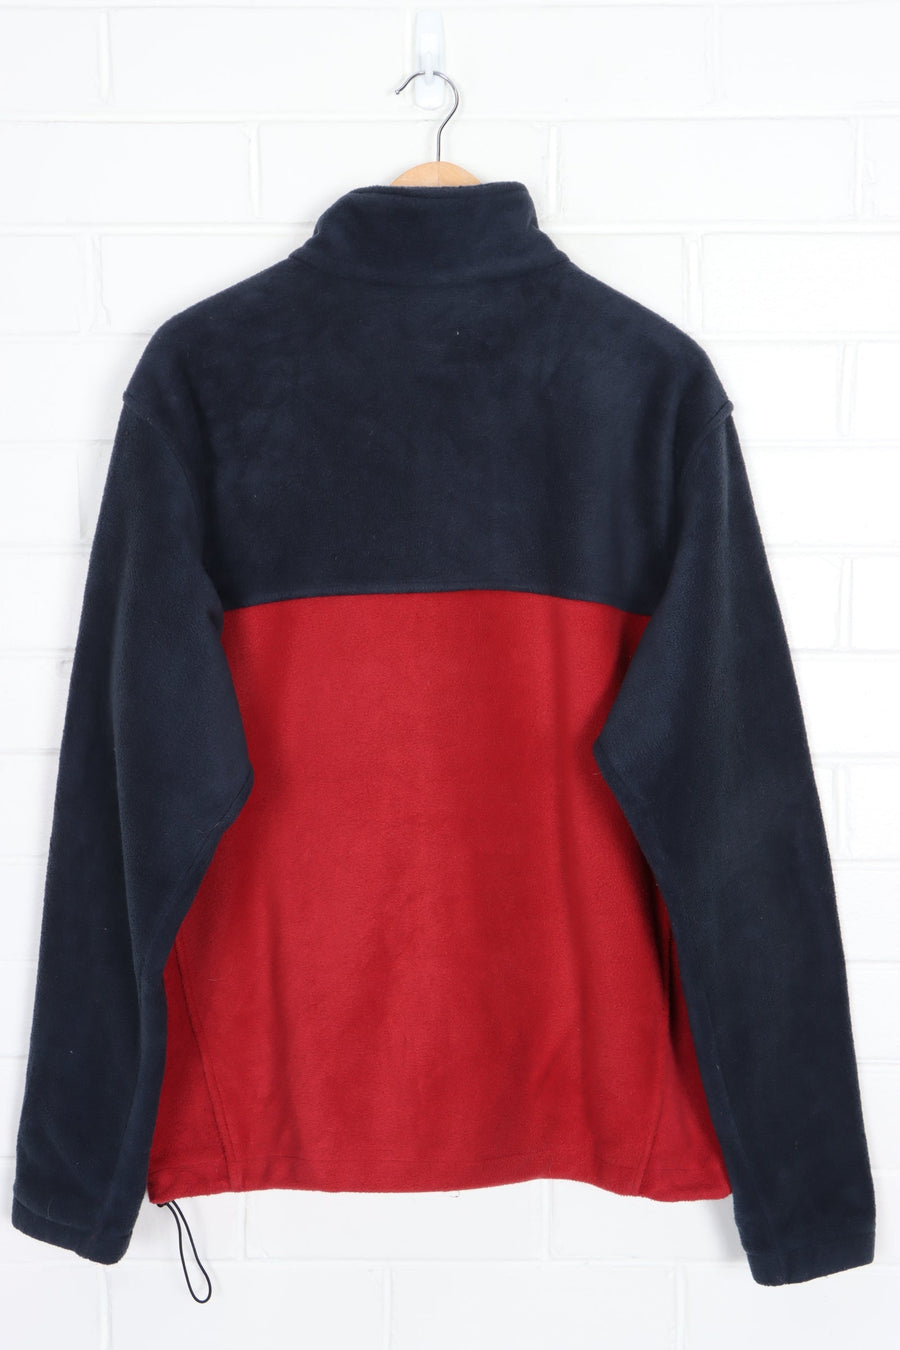 COLUMBIA Navy & Red Colour Block Fleece Jacket (L)